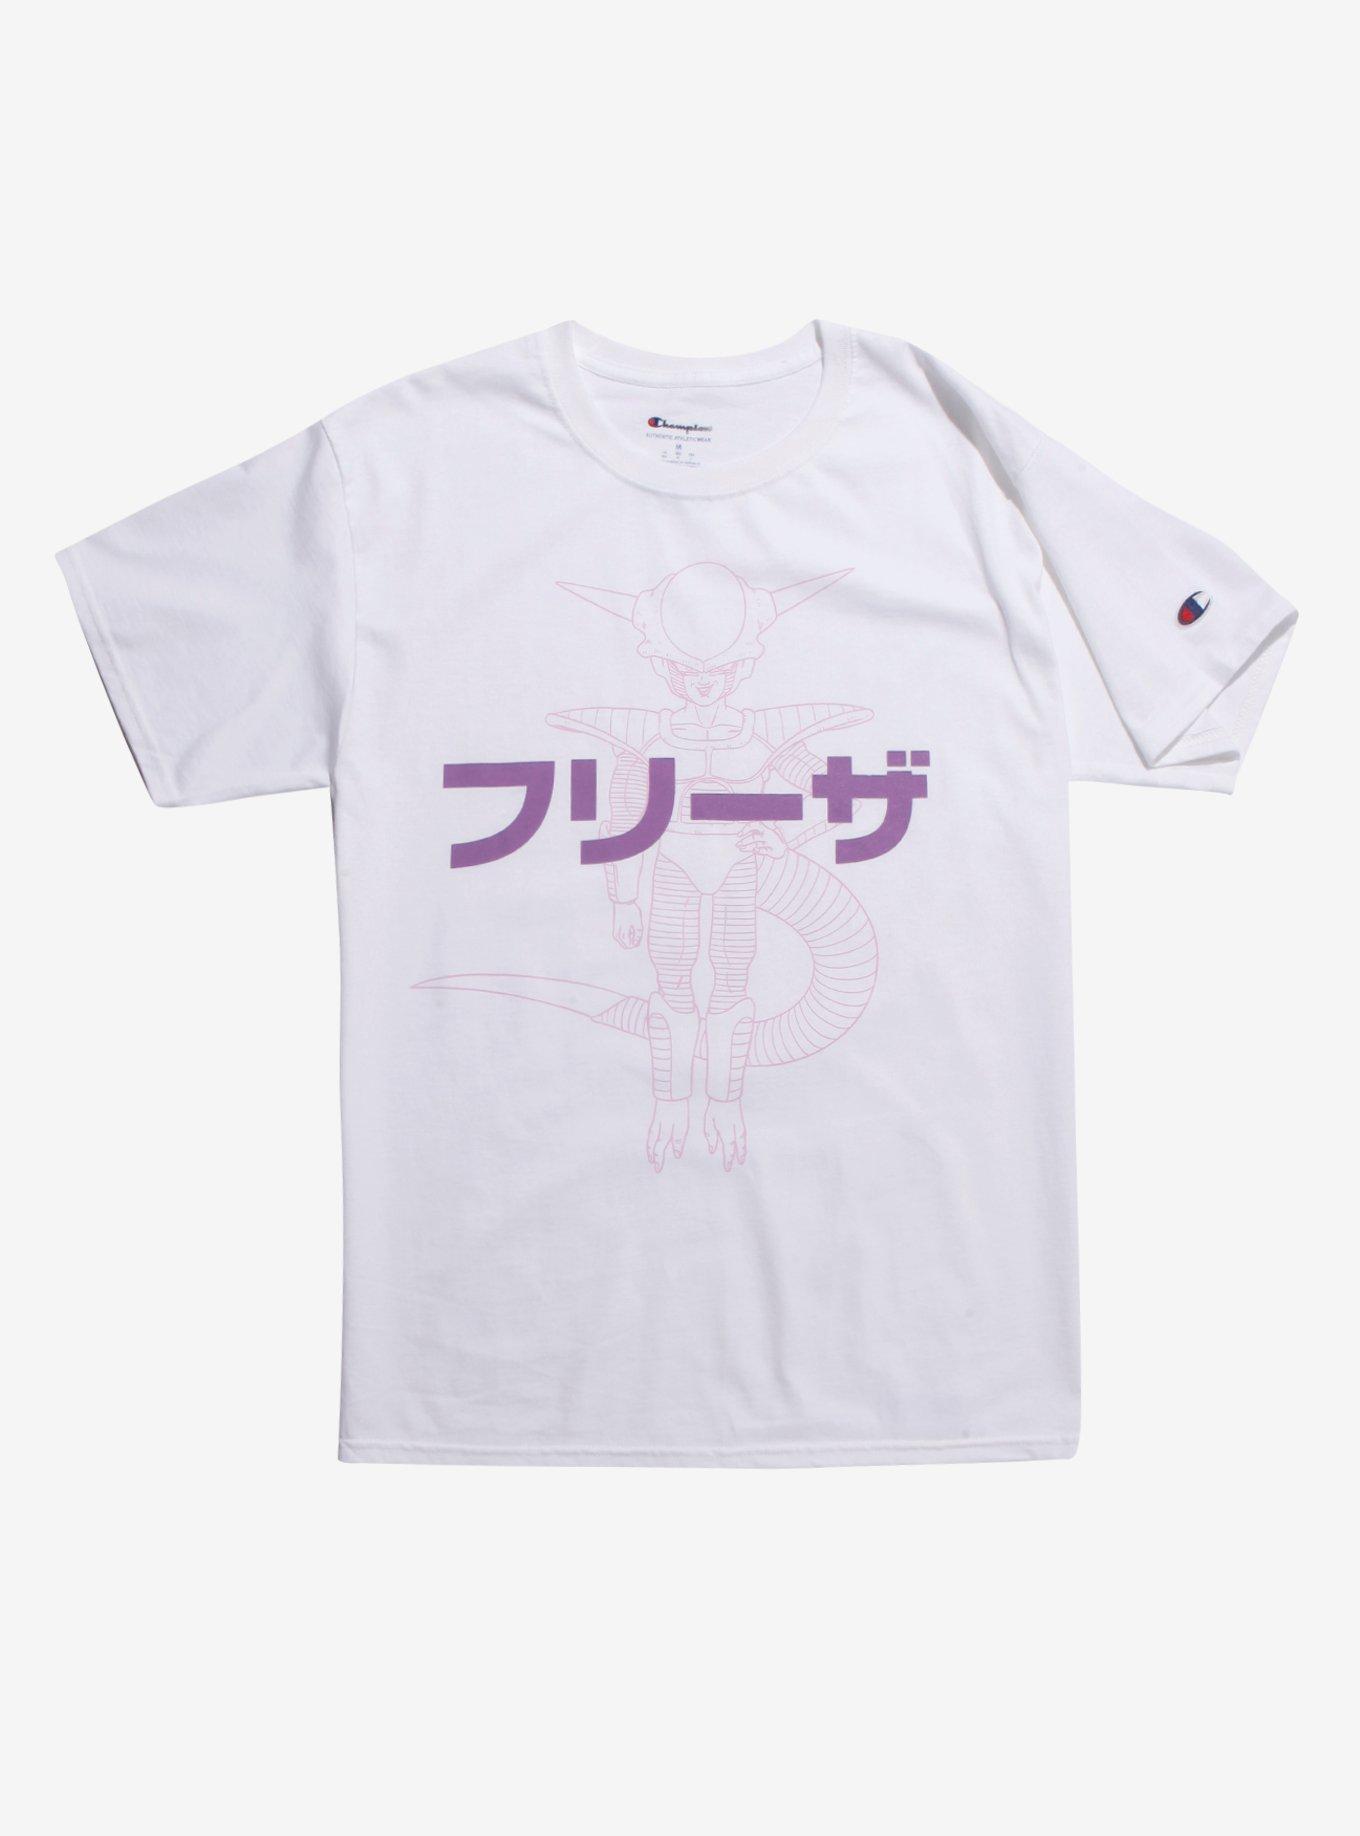 Dragon Ball Z Frieza Champion T-Shirt Hot Topic Exclusive, WHITE, hi-res